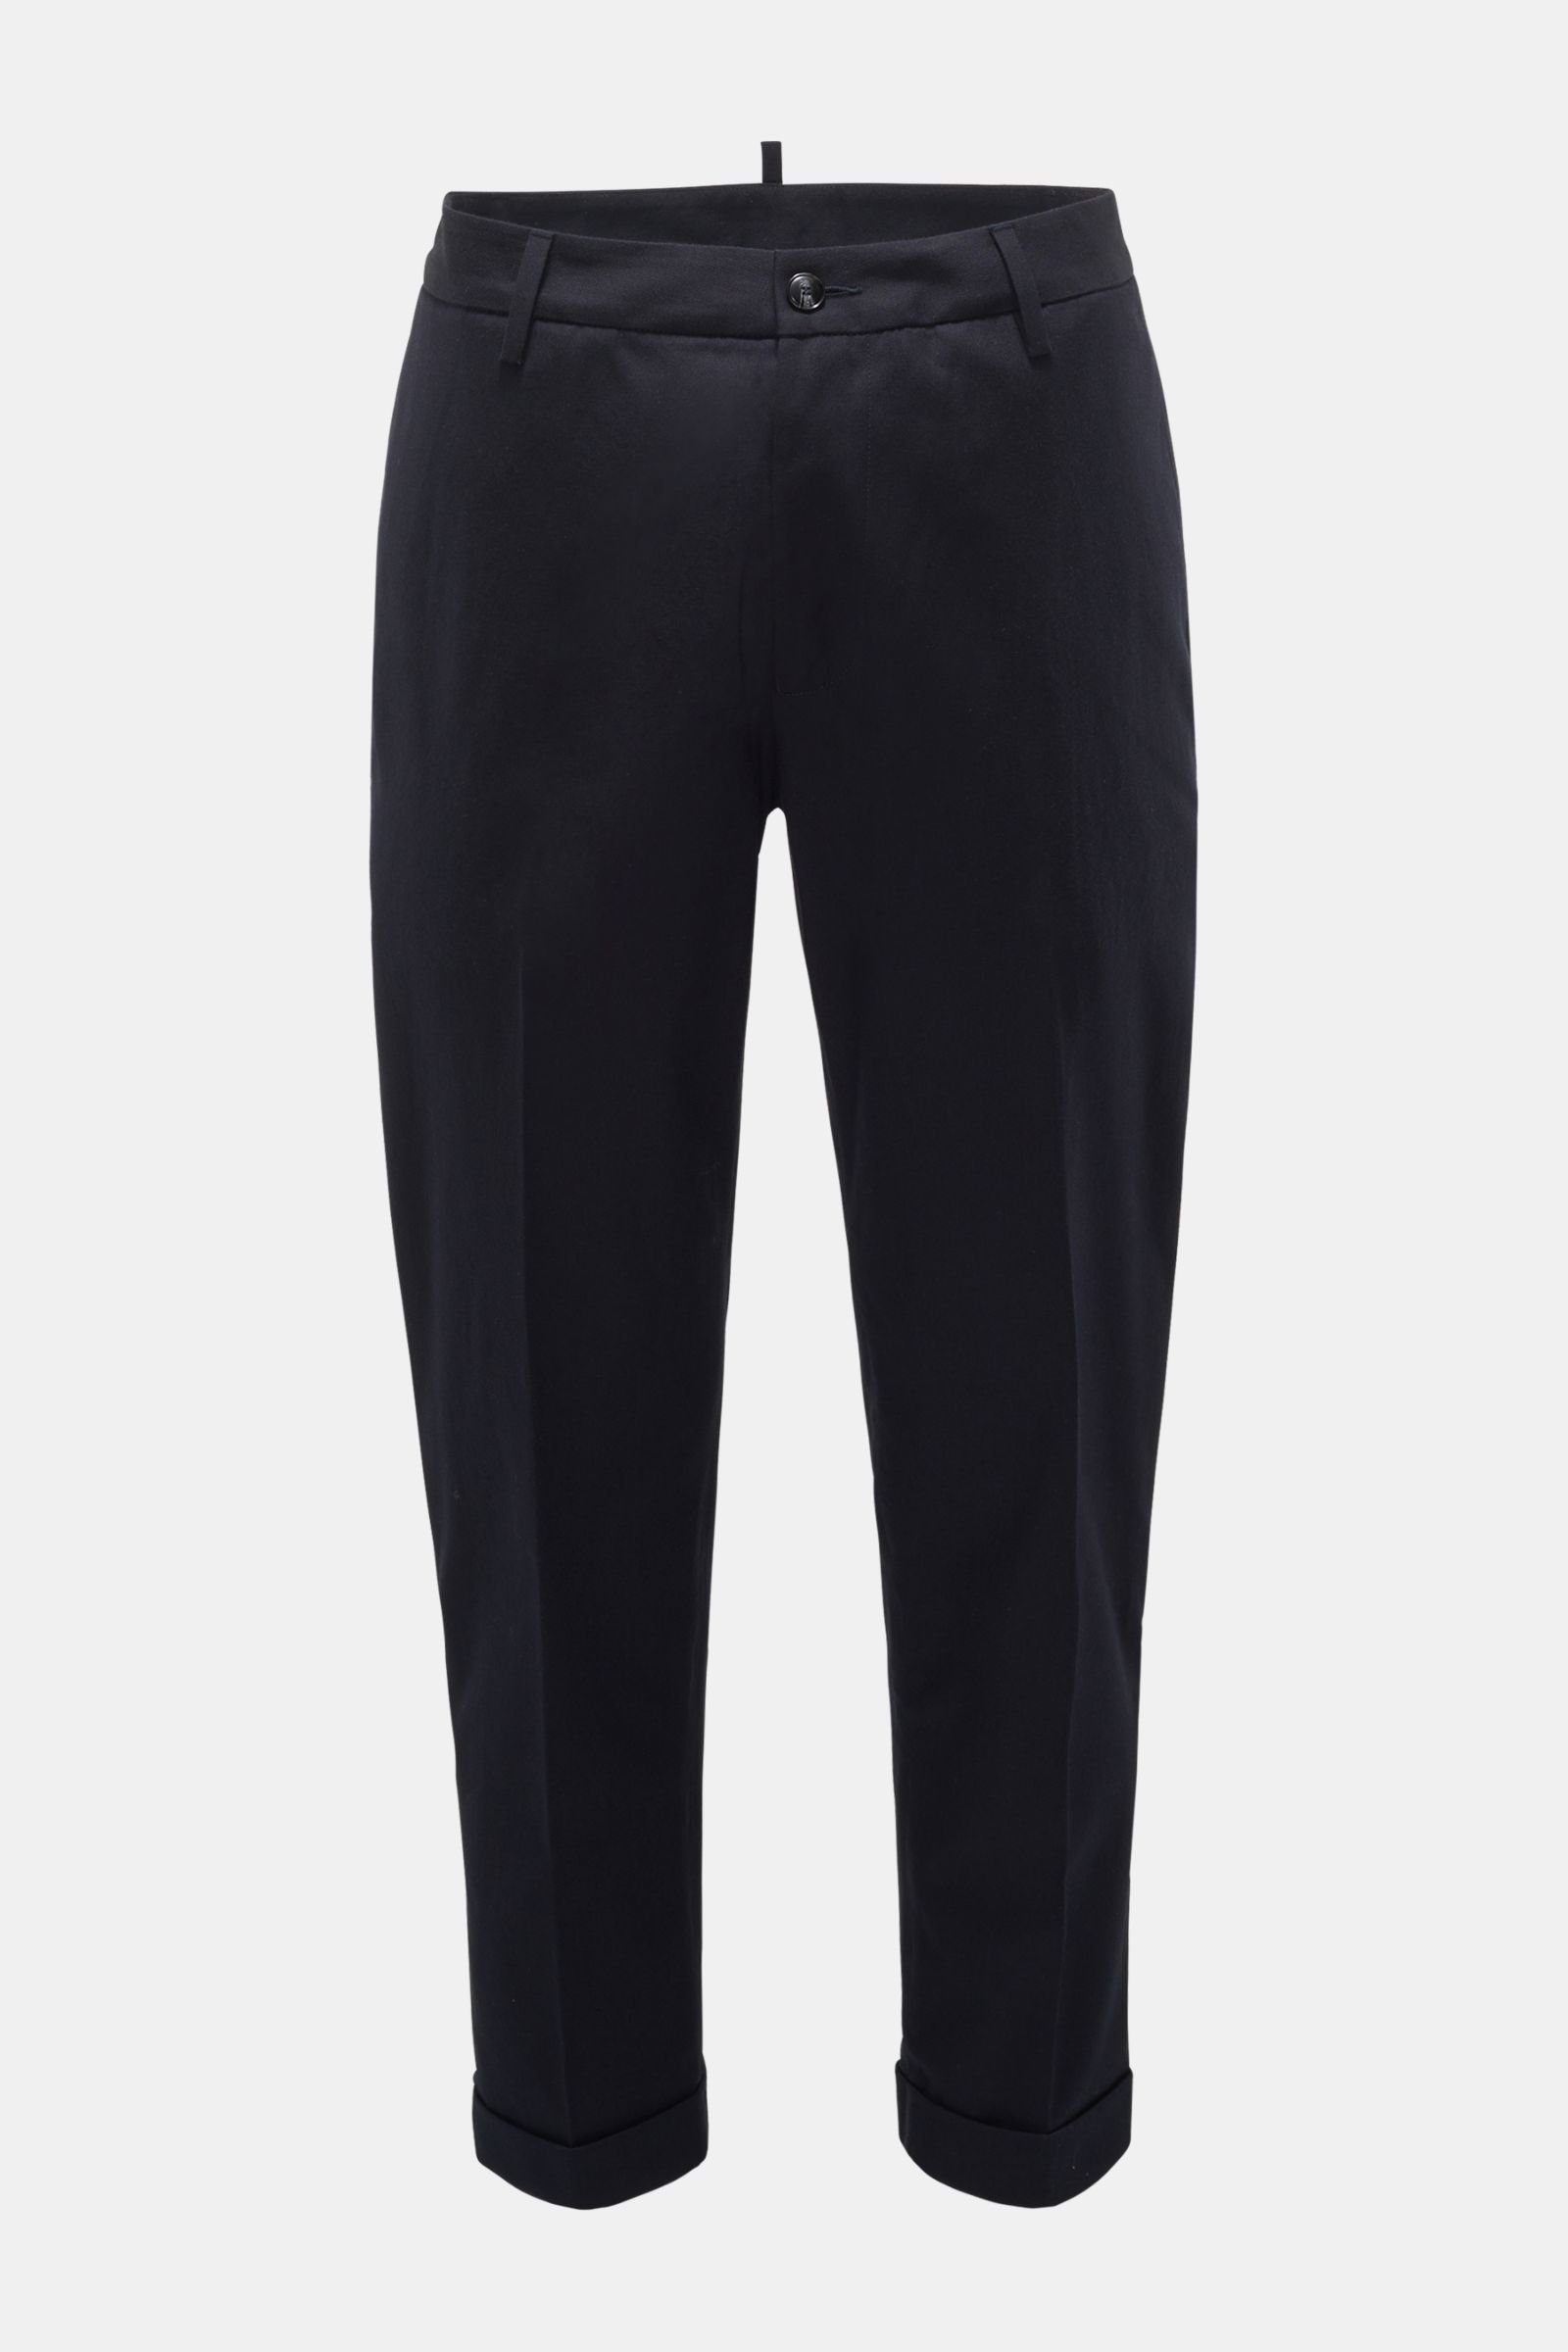 Emporio Armani Trousers Black  Mainline Menswear Denmark